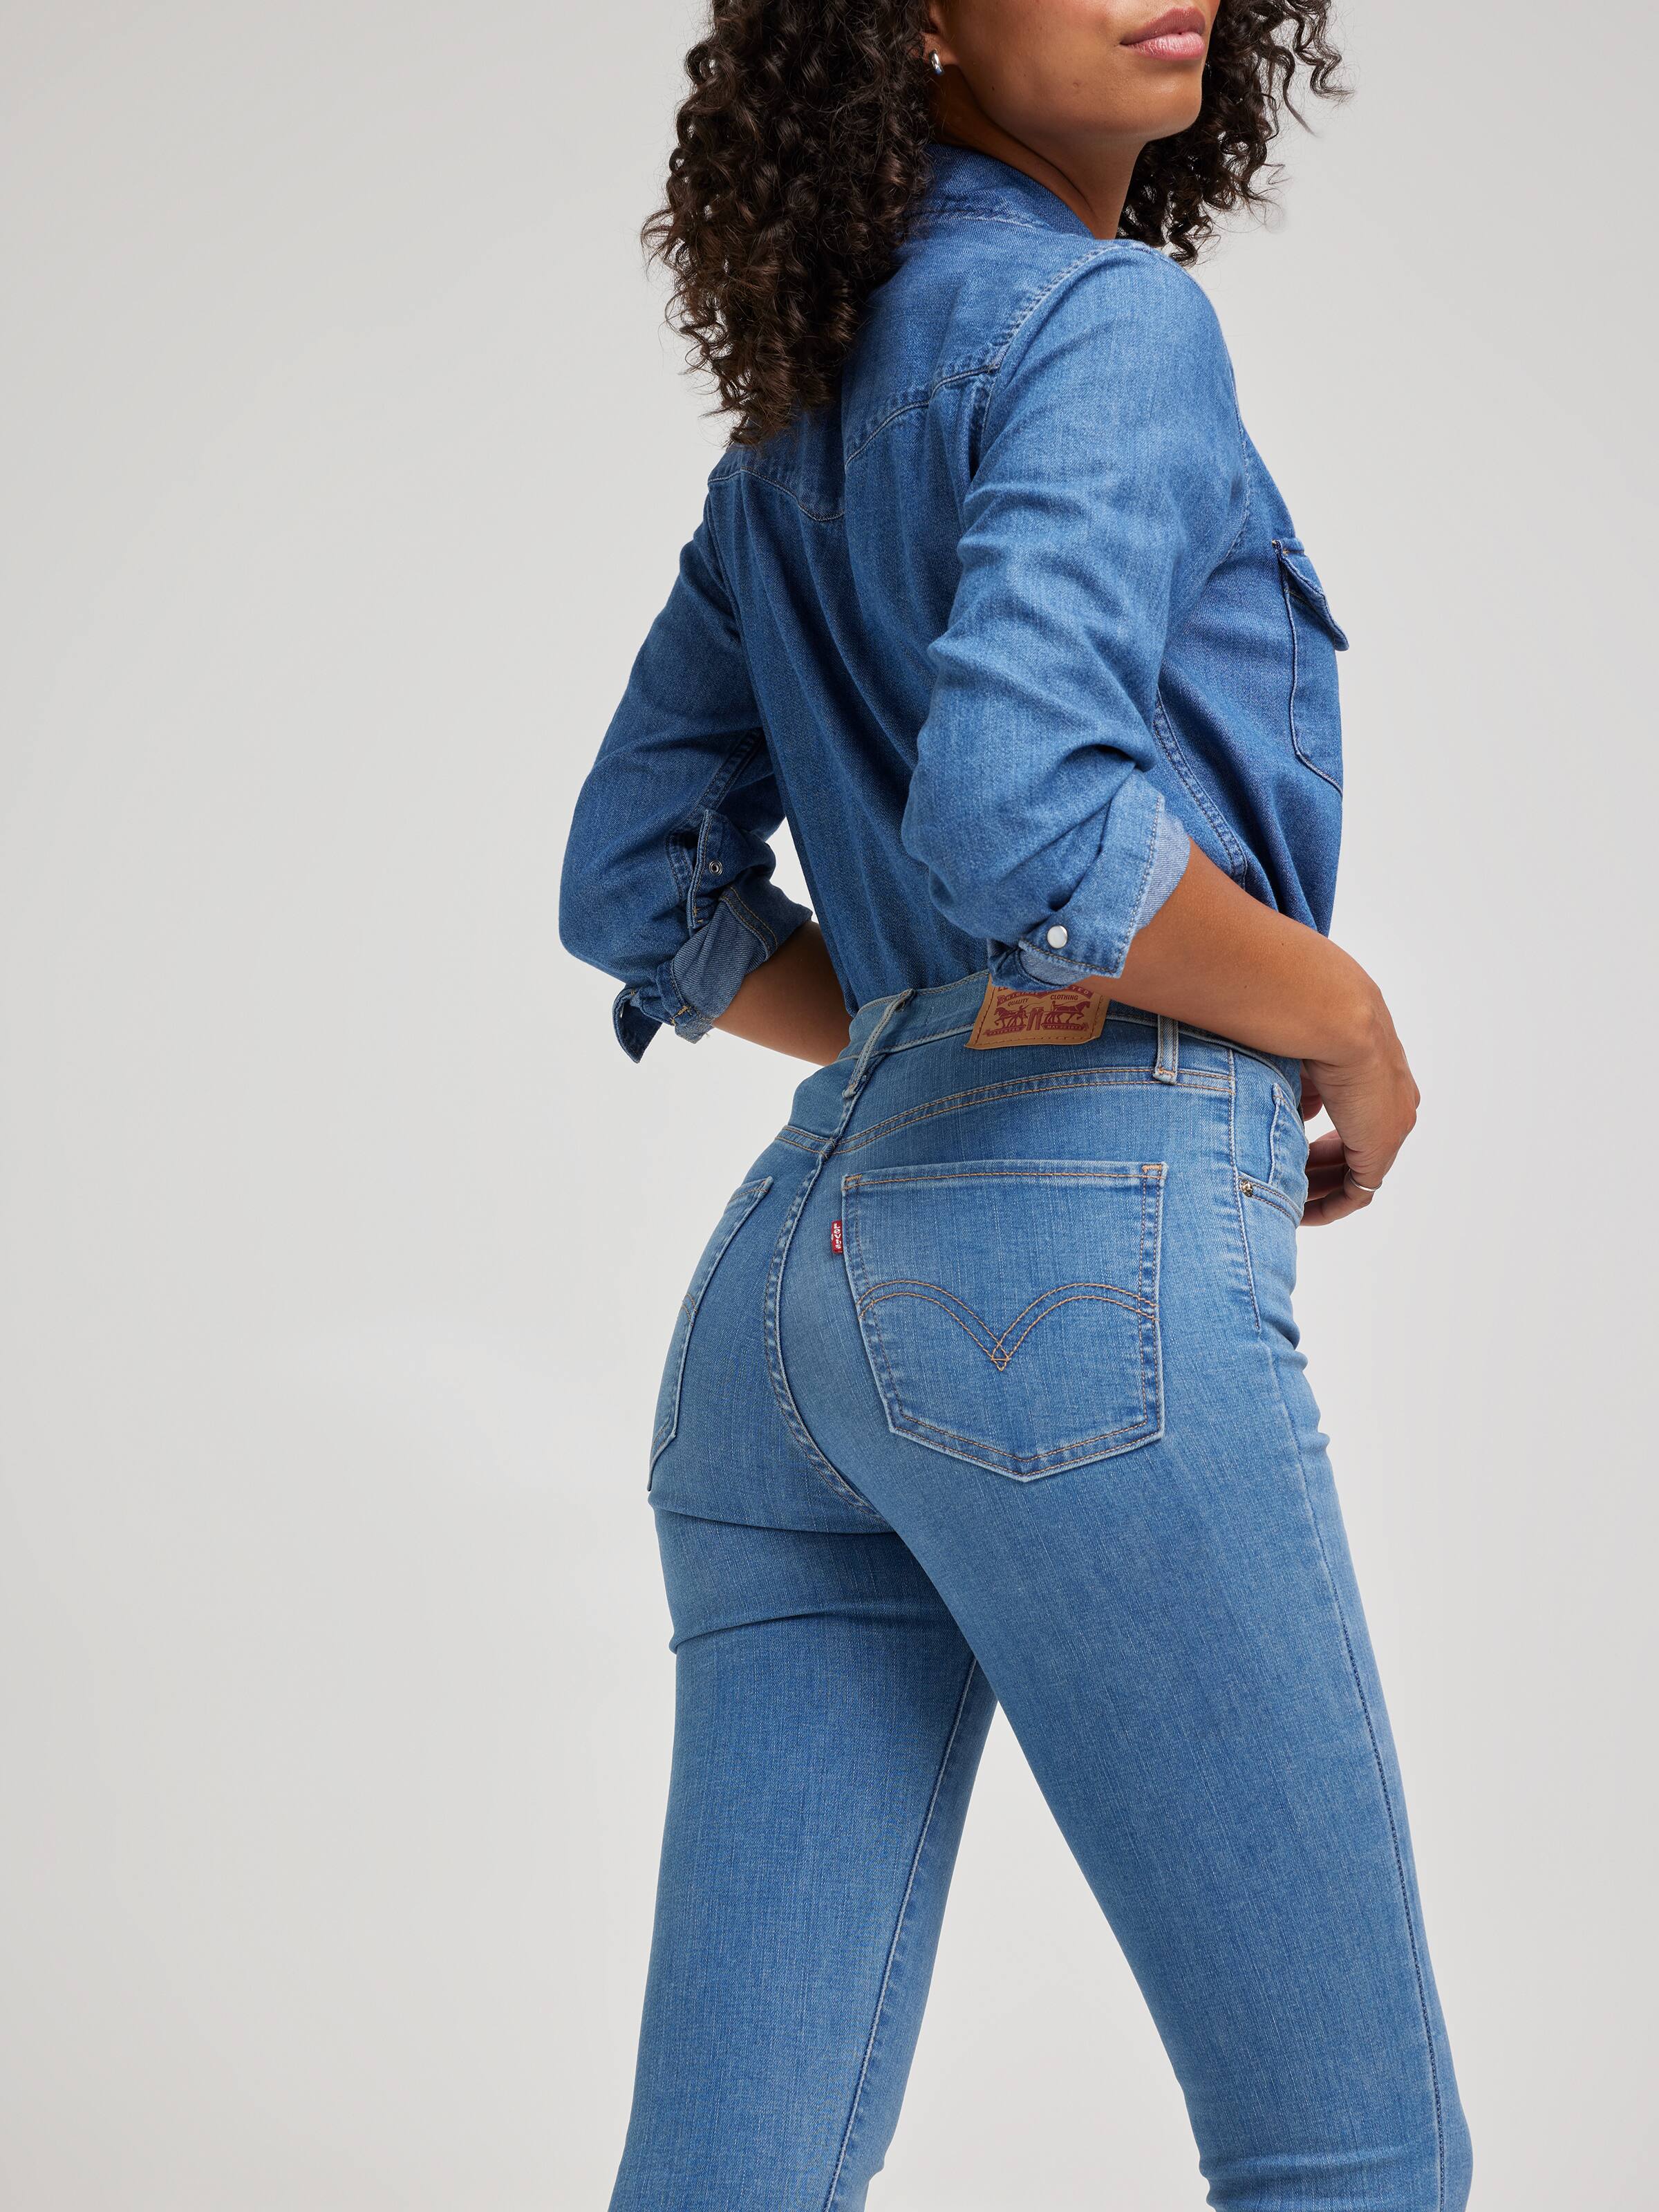 Levi's Women's Mile High Super Skinny Jeans - Upgrade